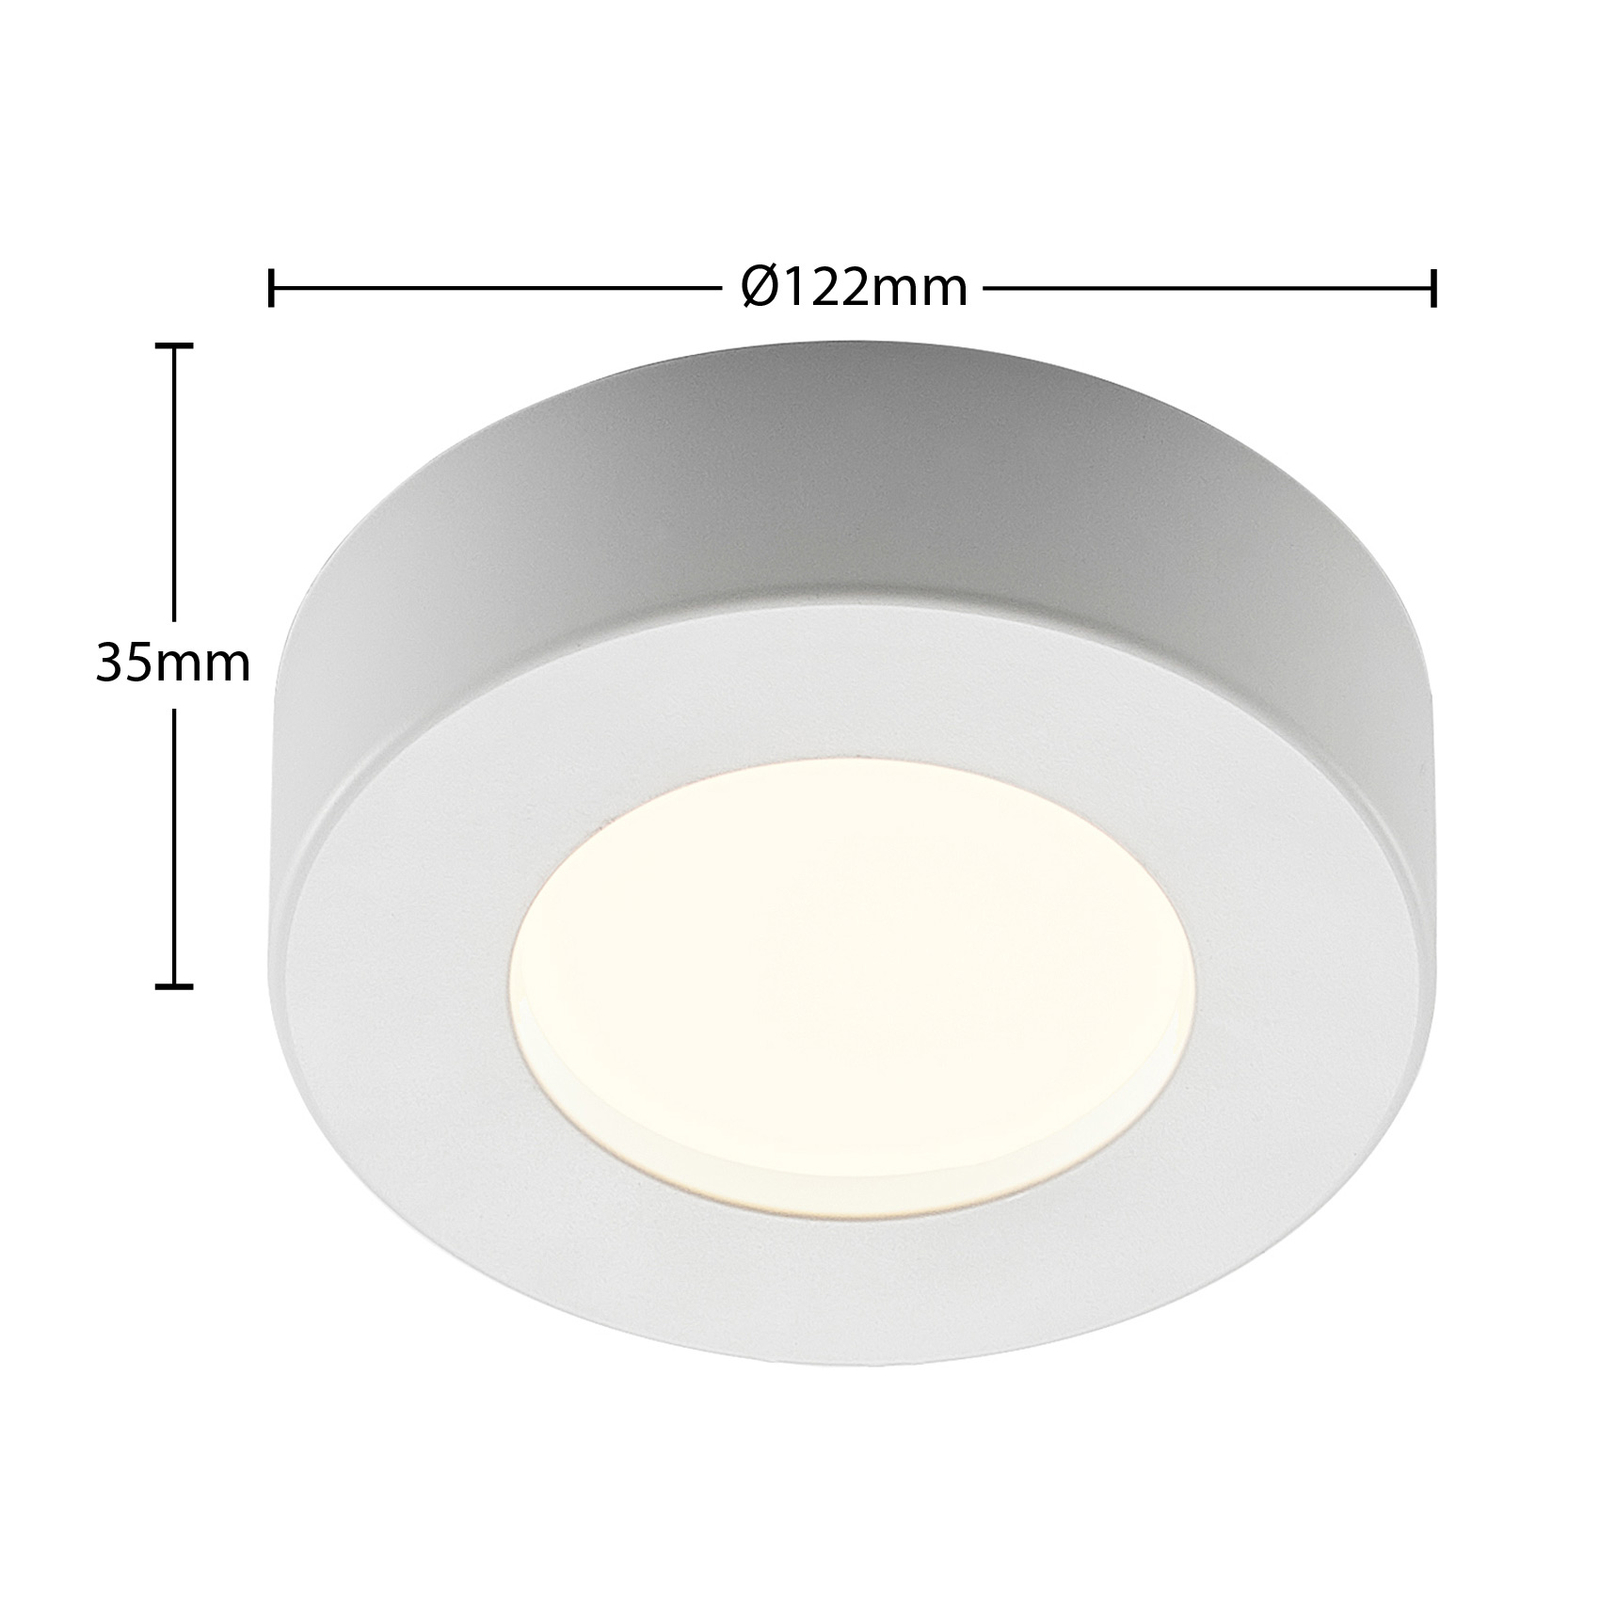 Prios Edwina plafón LED, blanco, 12,2 cm